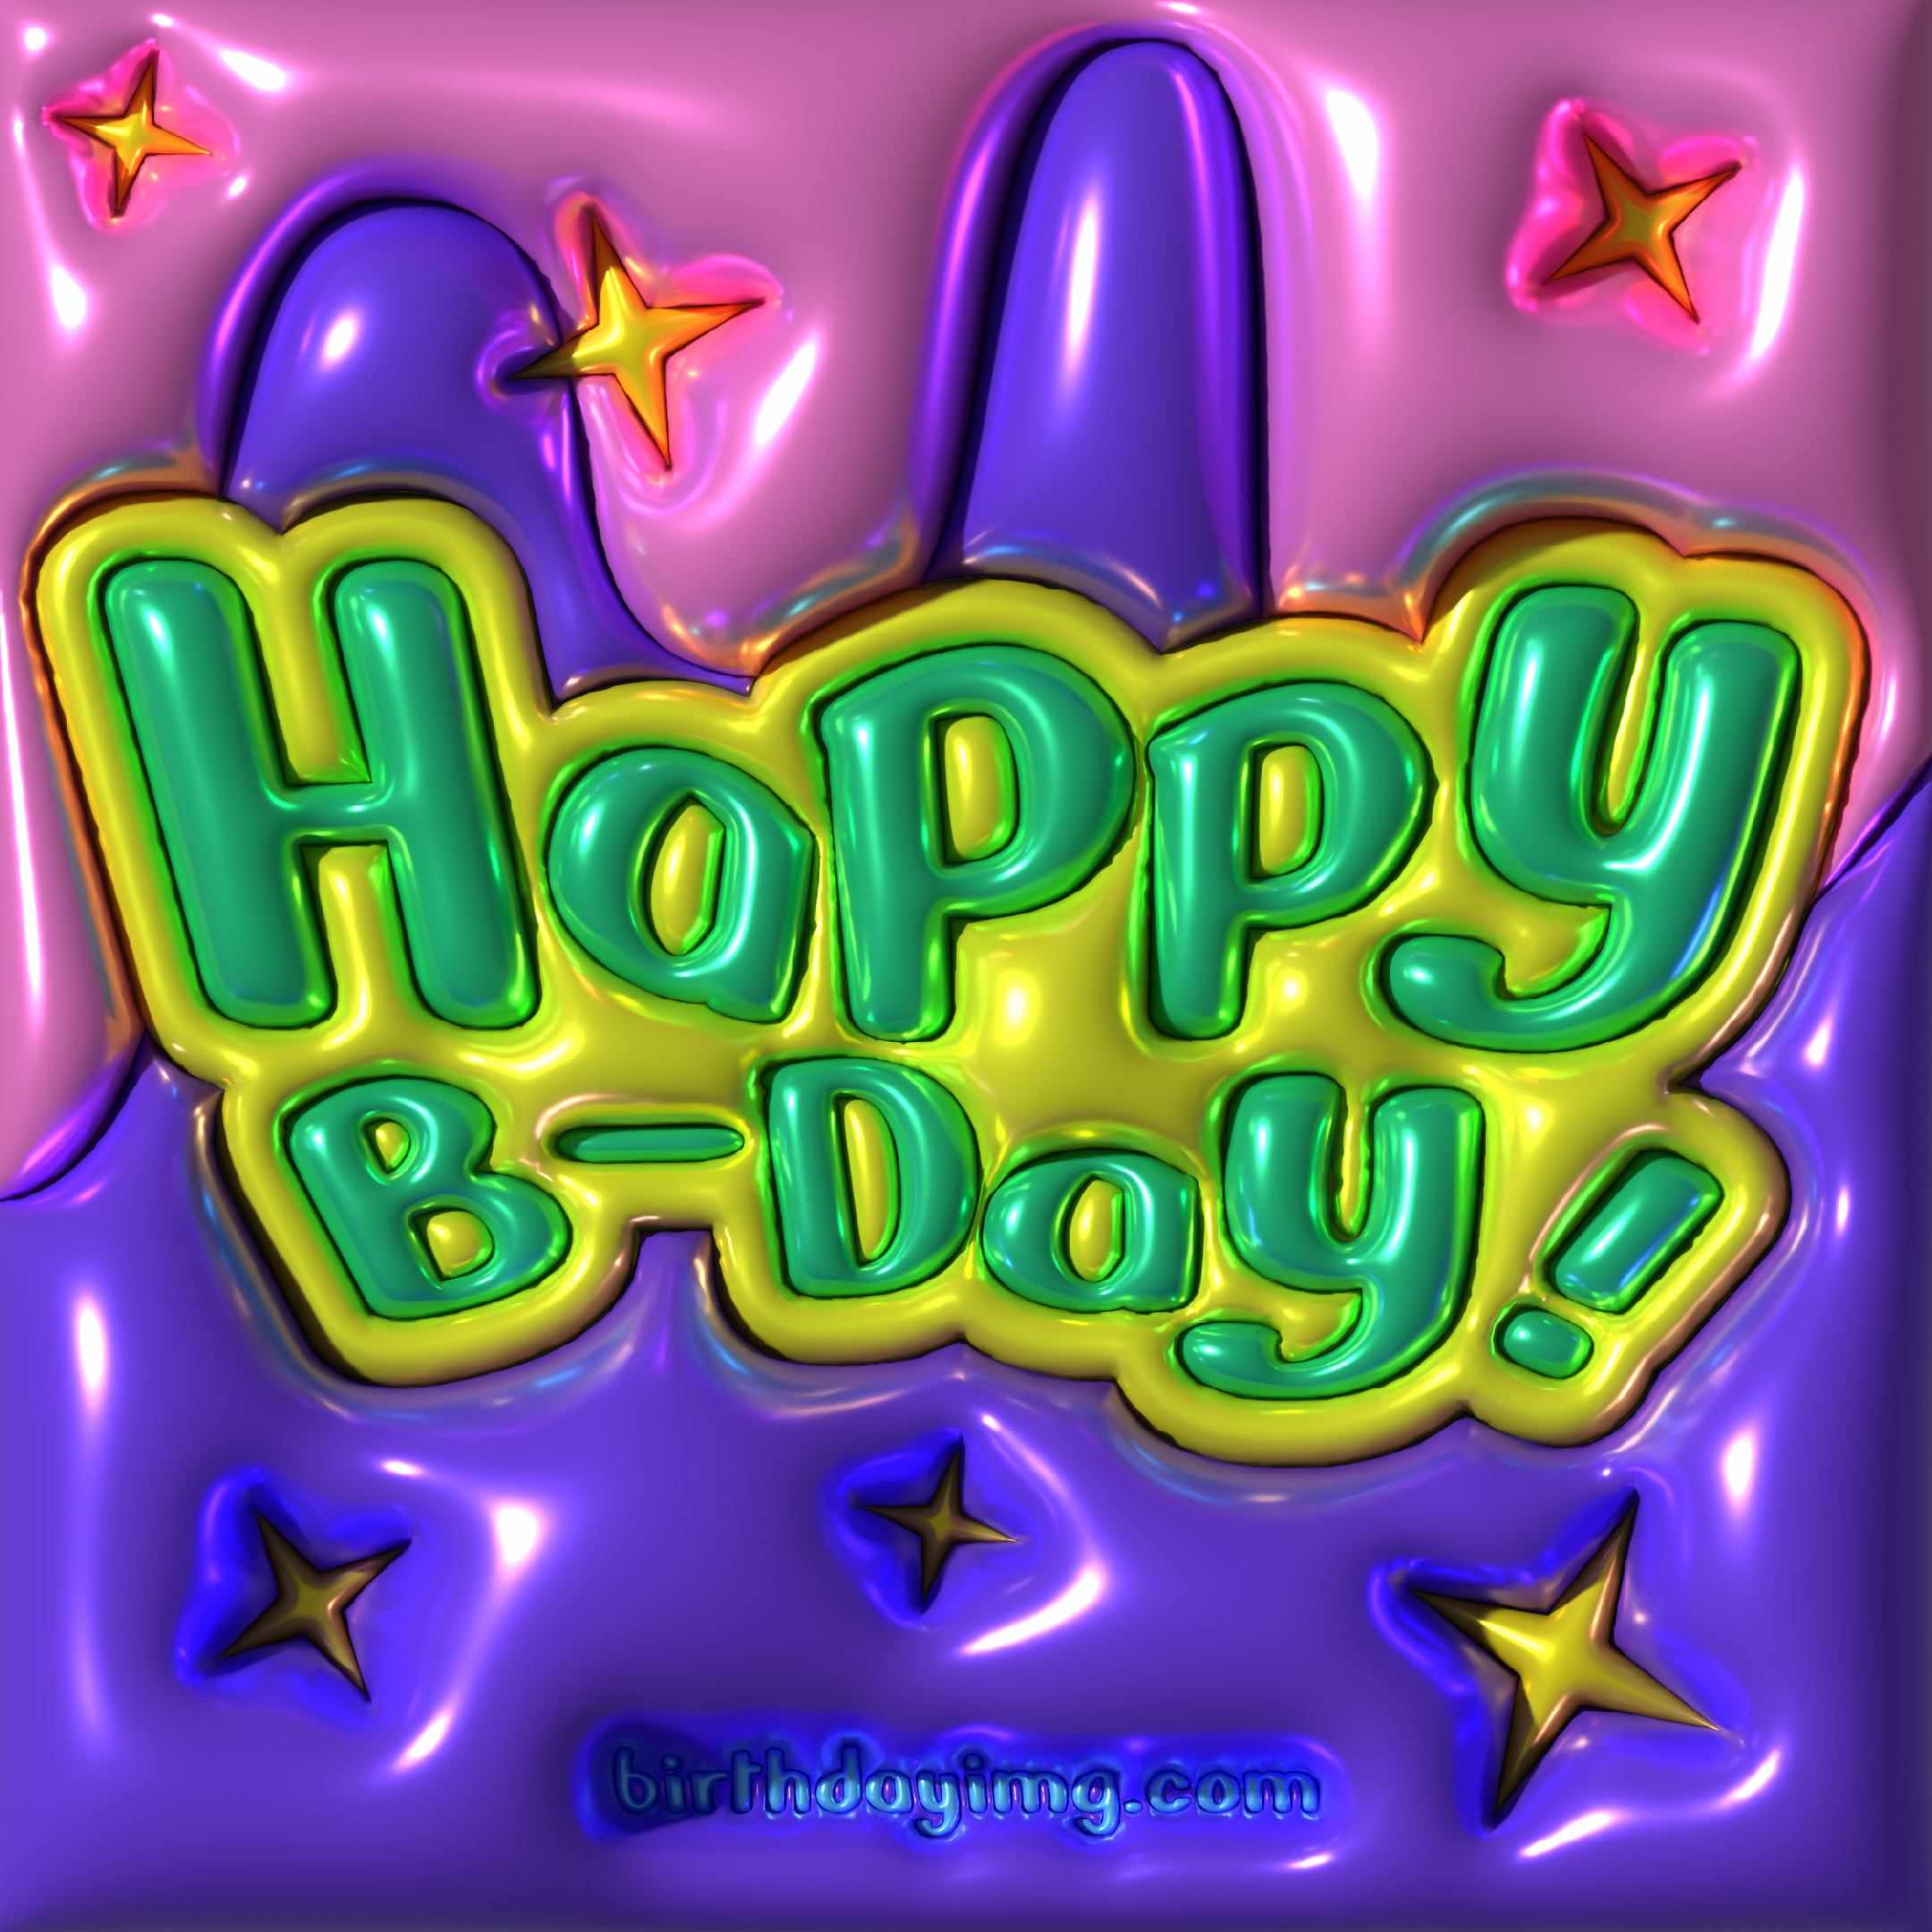 Free Happy Birthday Wishes For Free - birthdayimg.com